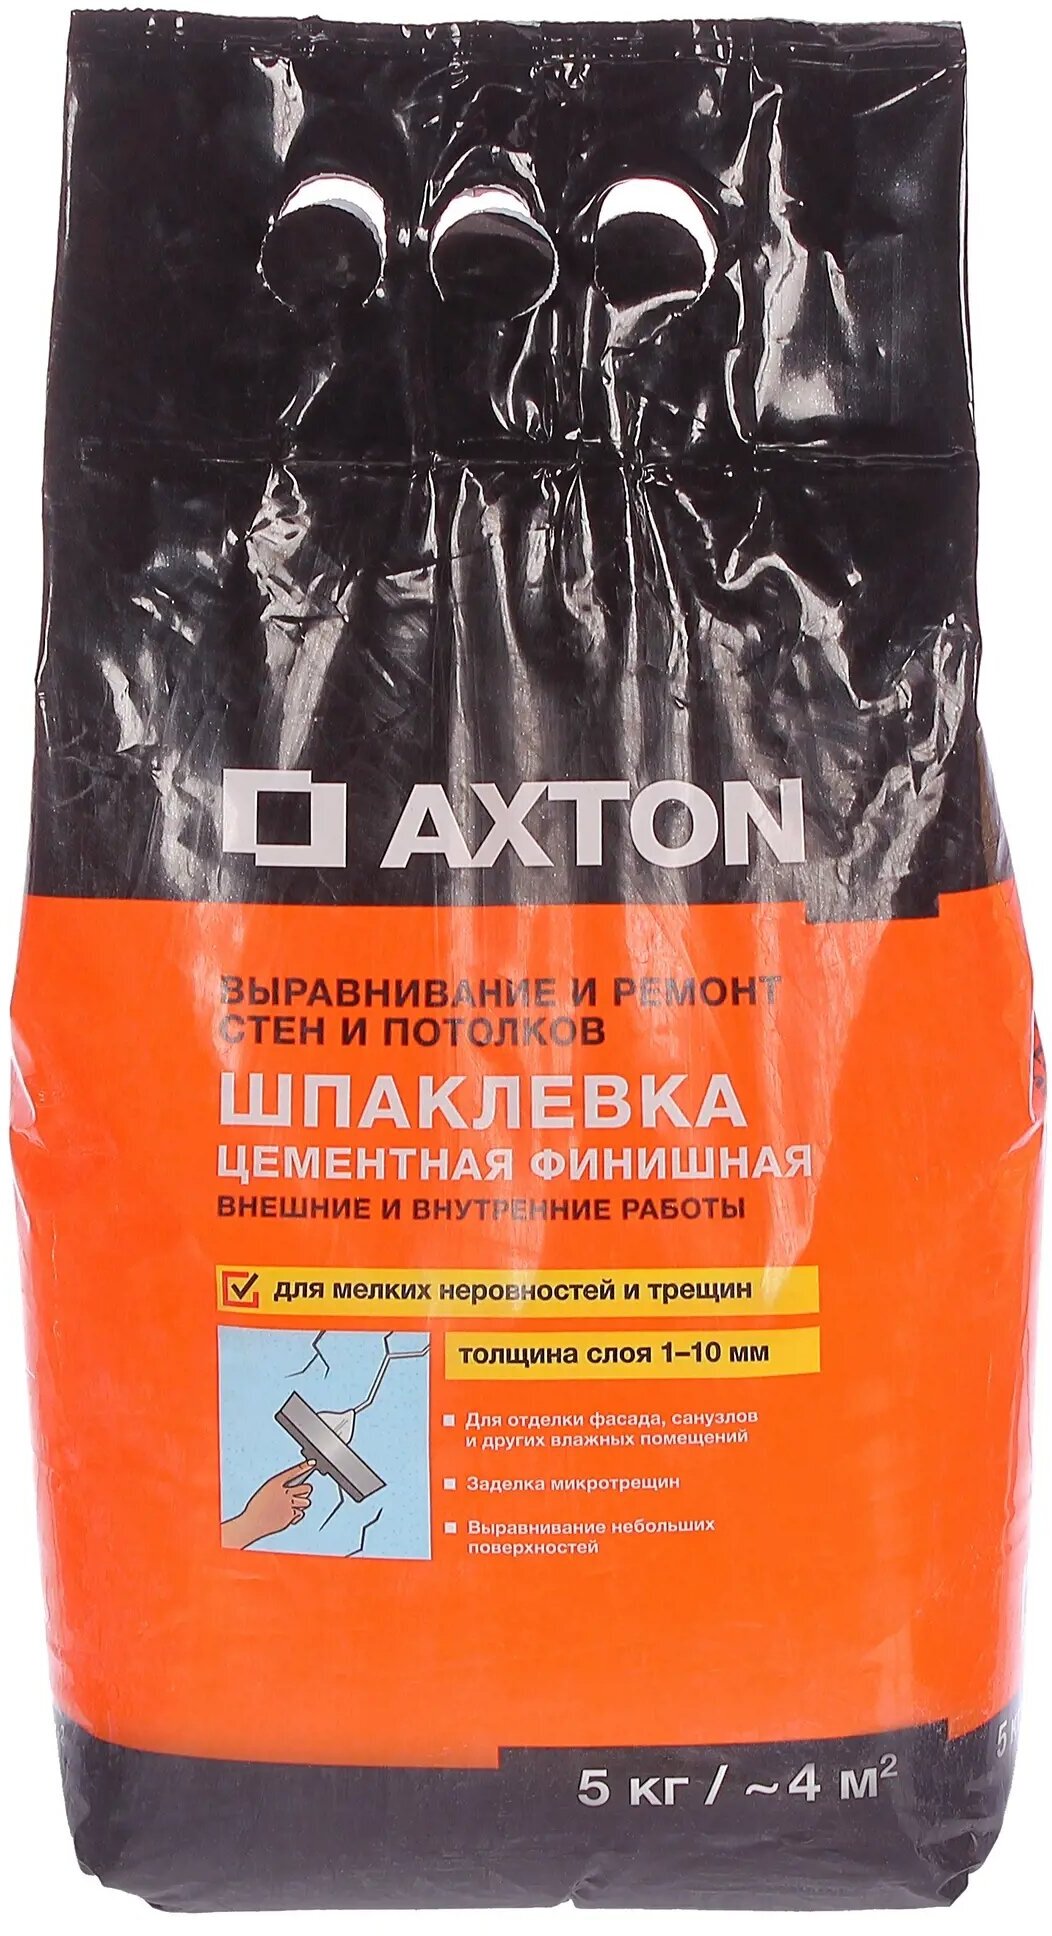 Шпаклёвка цементная финишная Axton 5 кг